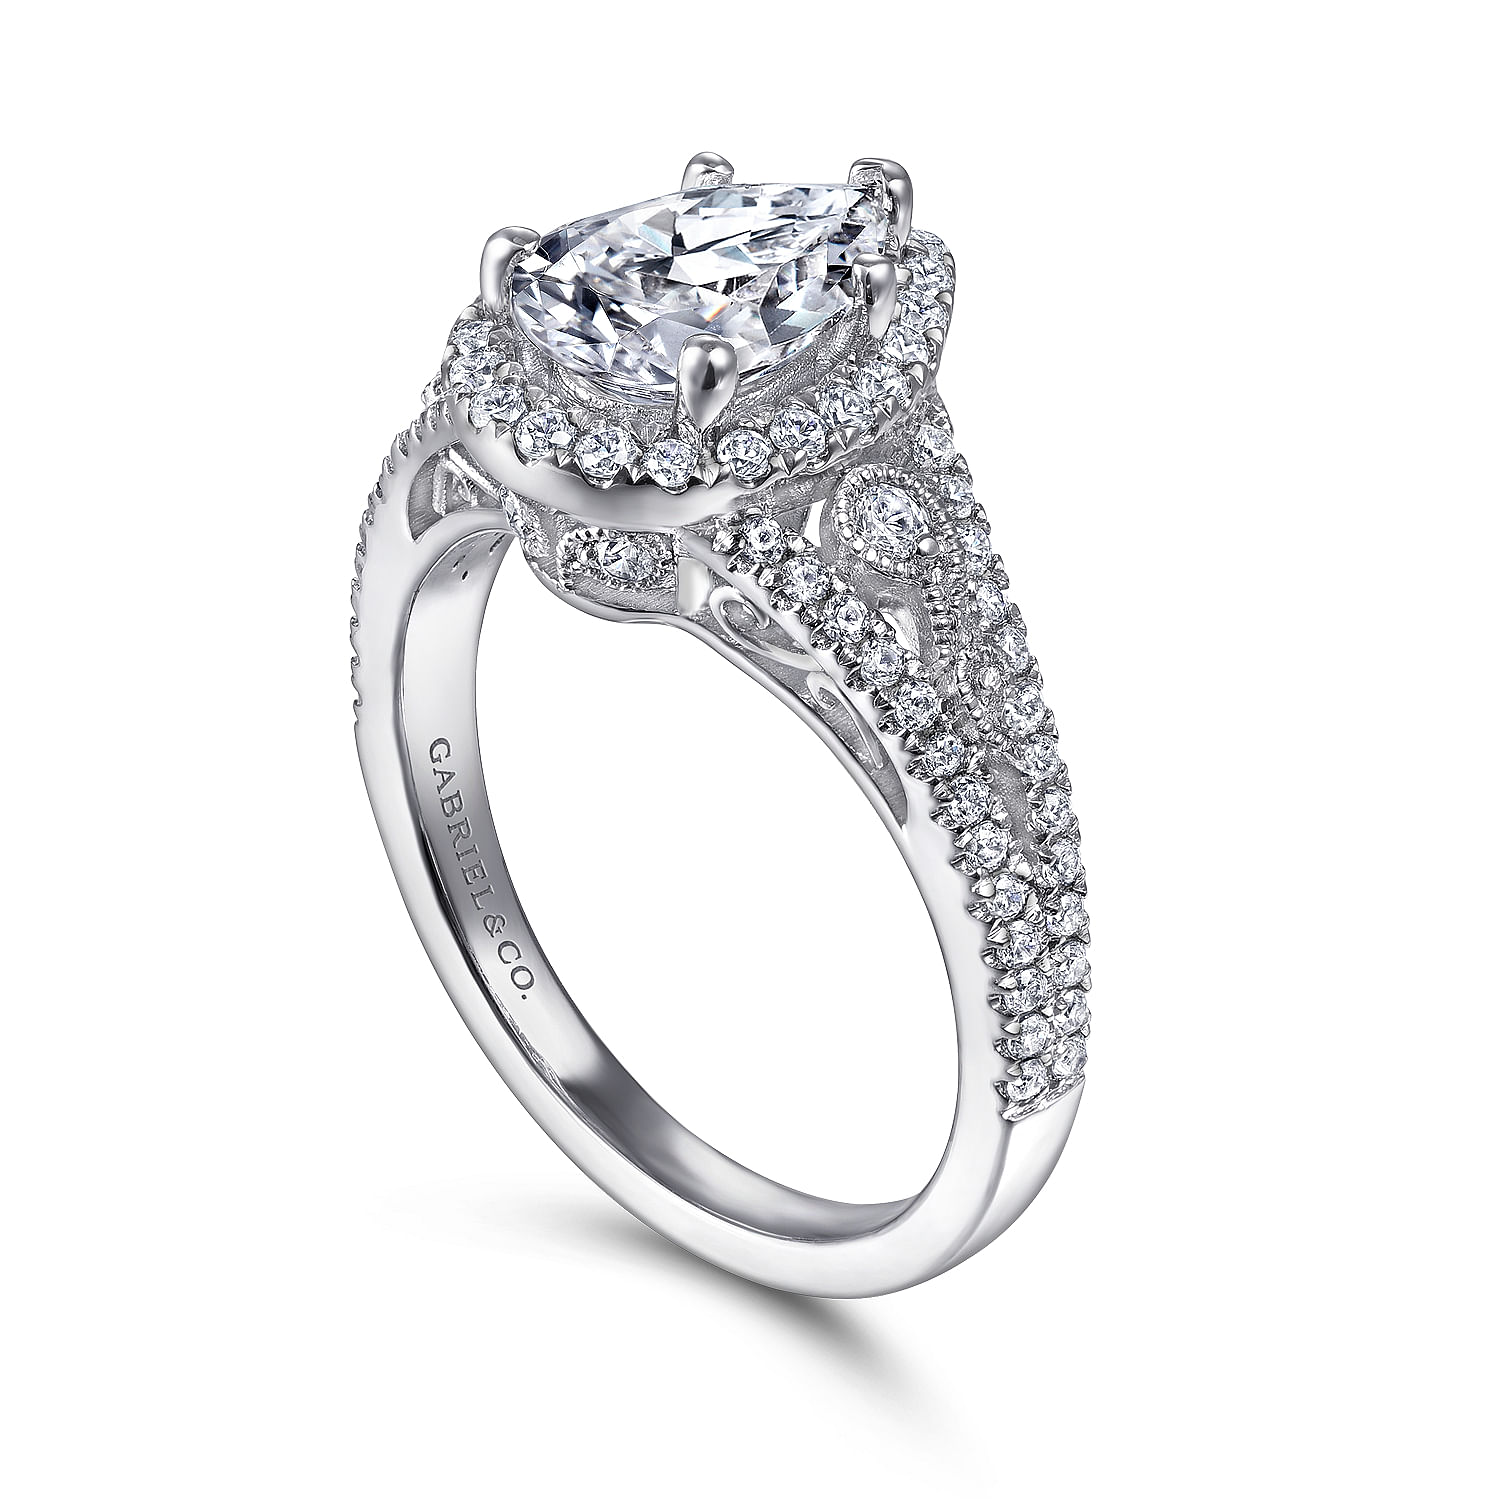 Vintage Inspired 14K White Gold Pear Shape Halo Diamond Engagement Ring